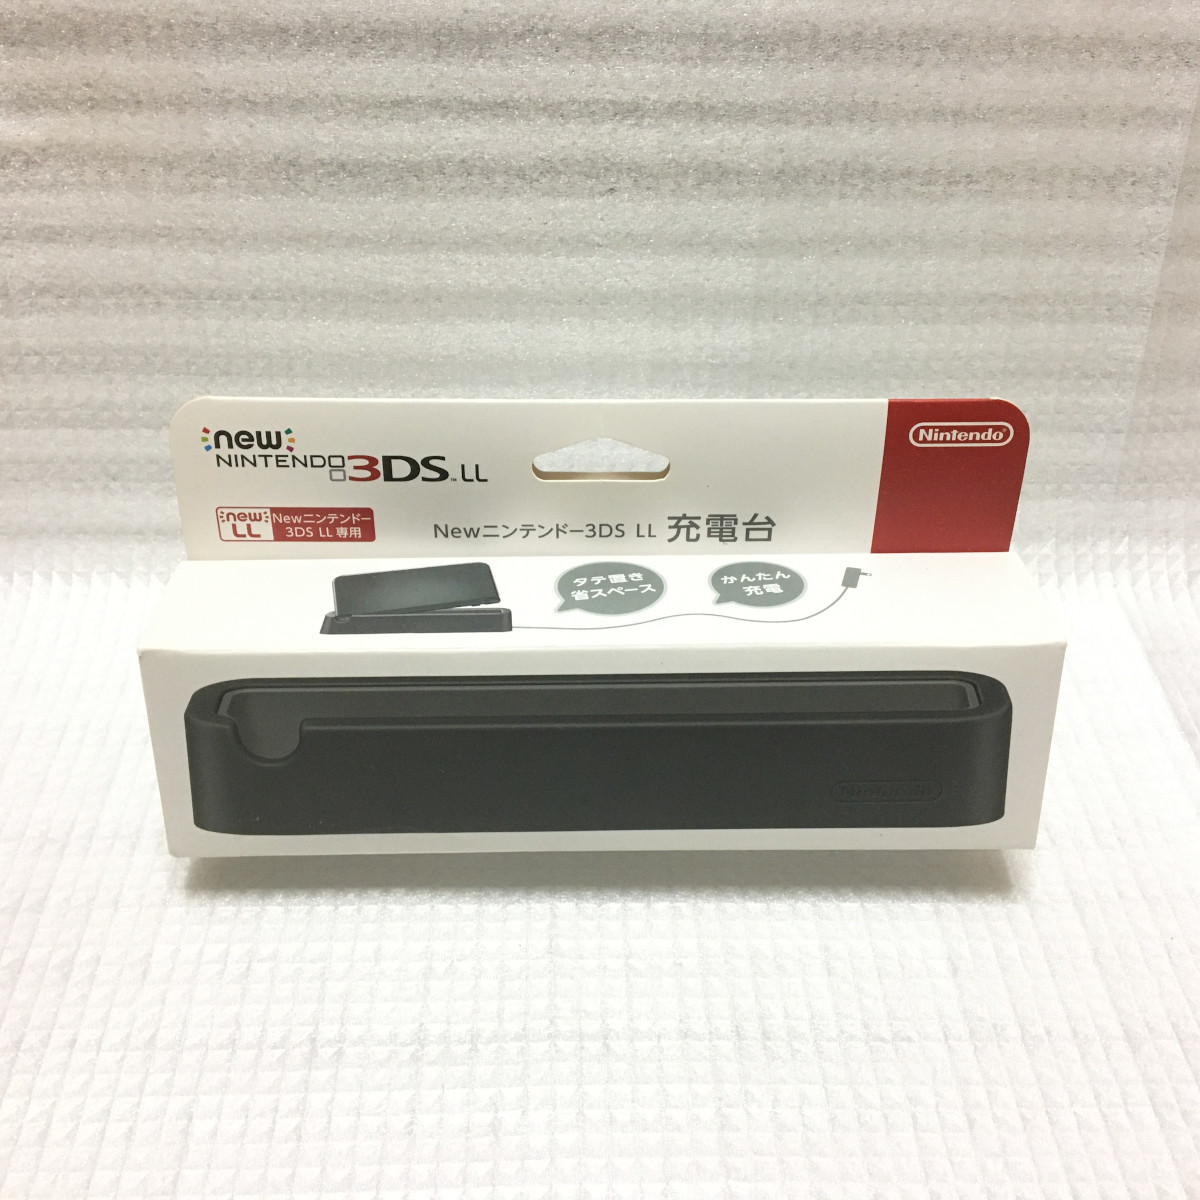 New ニンテンドー 3DS LL 専用 充電台 RED-007 ブラック 黒 箱 説明 